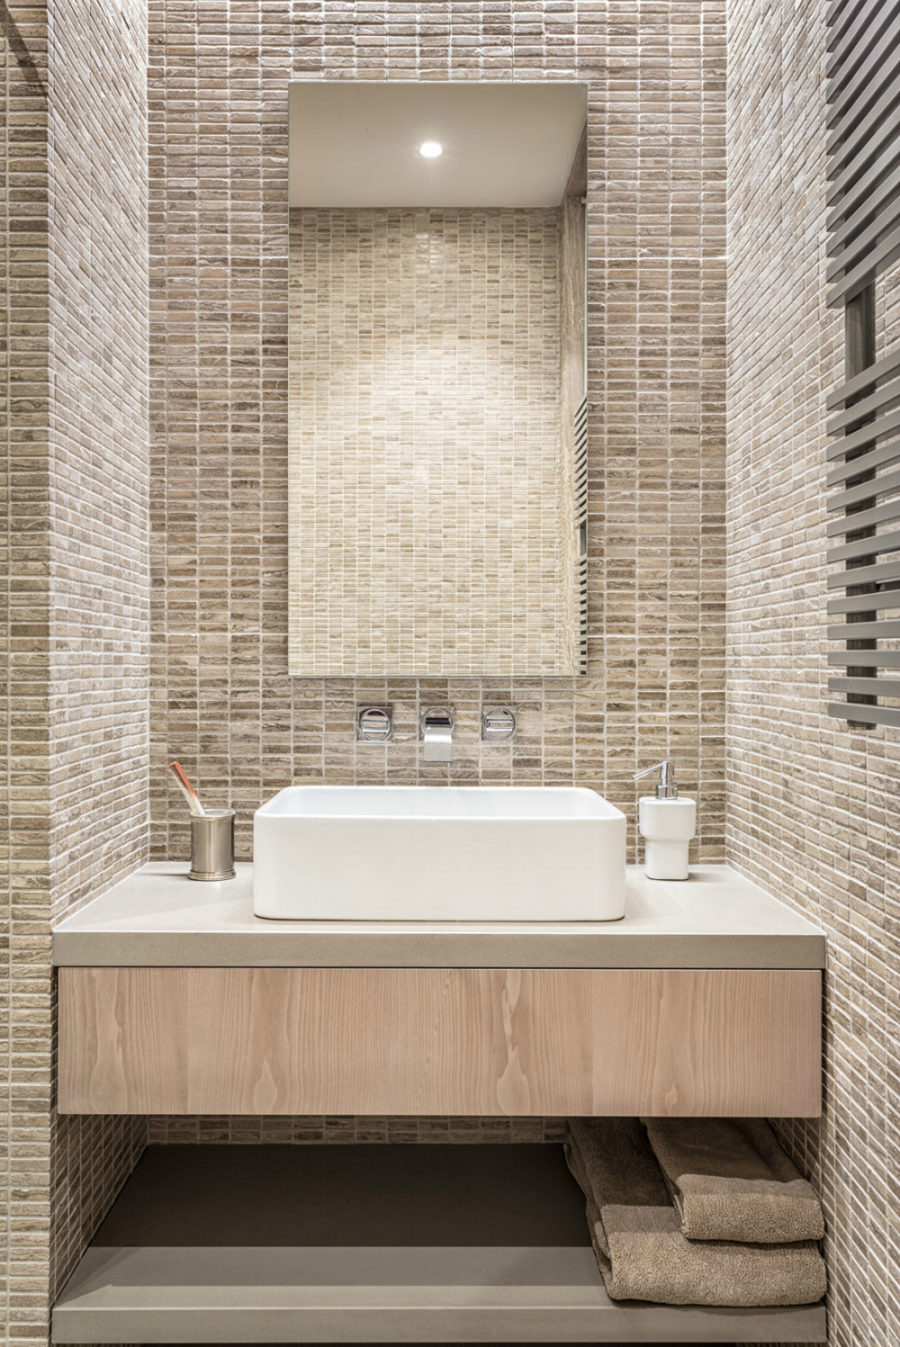 Another bathroom makes use of mini brick-like tiles